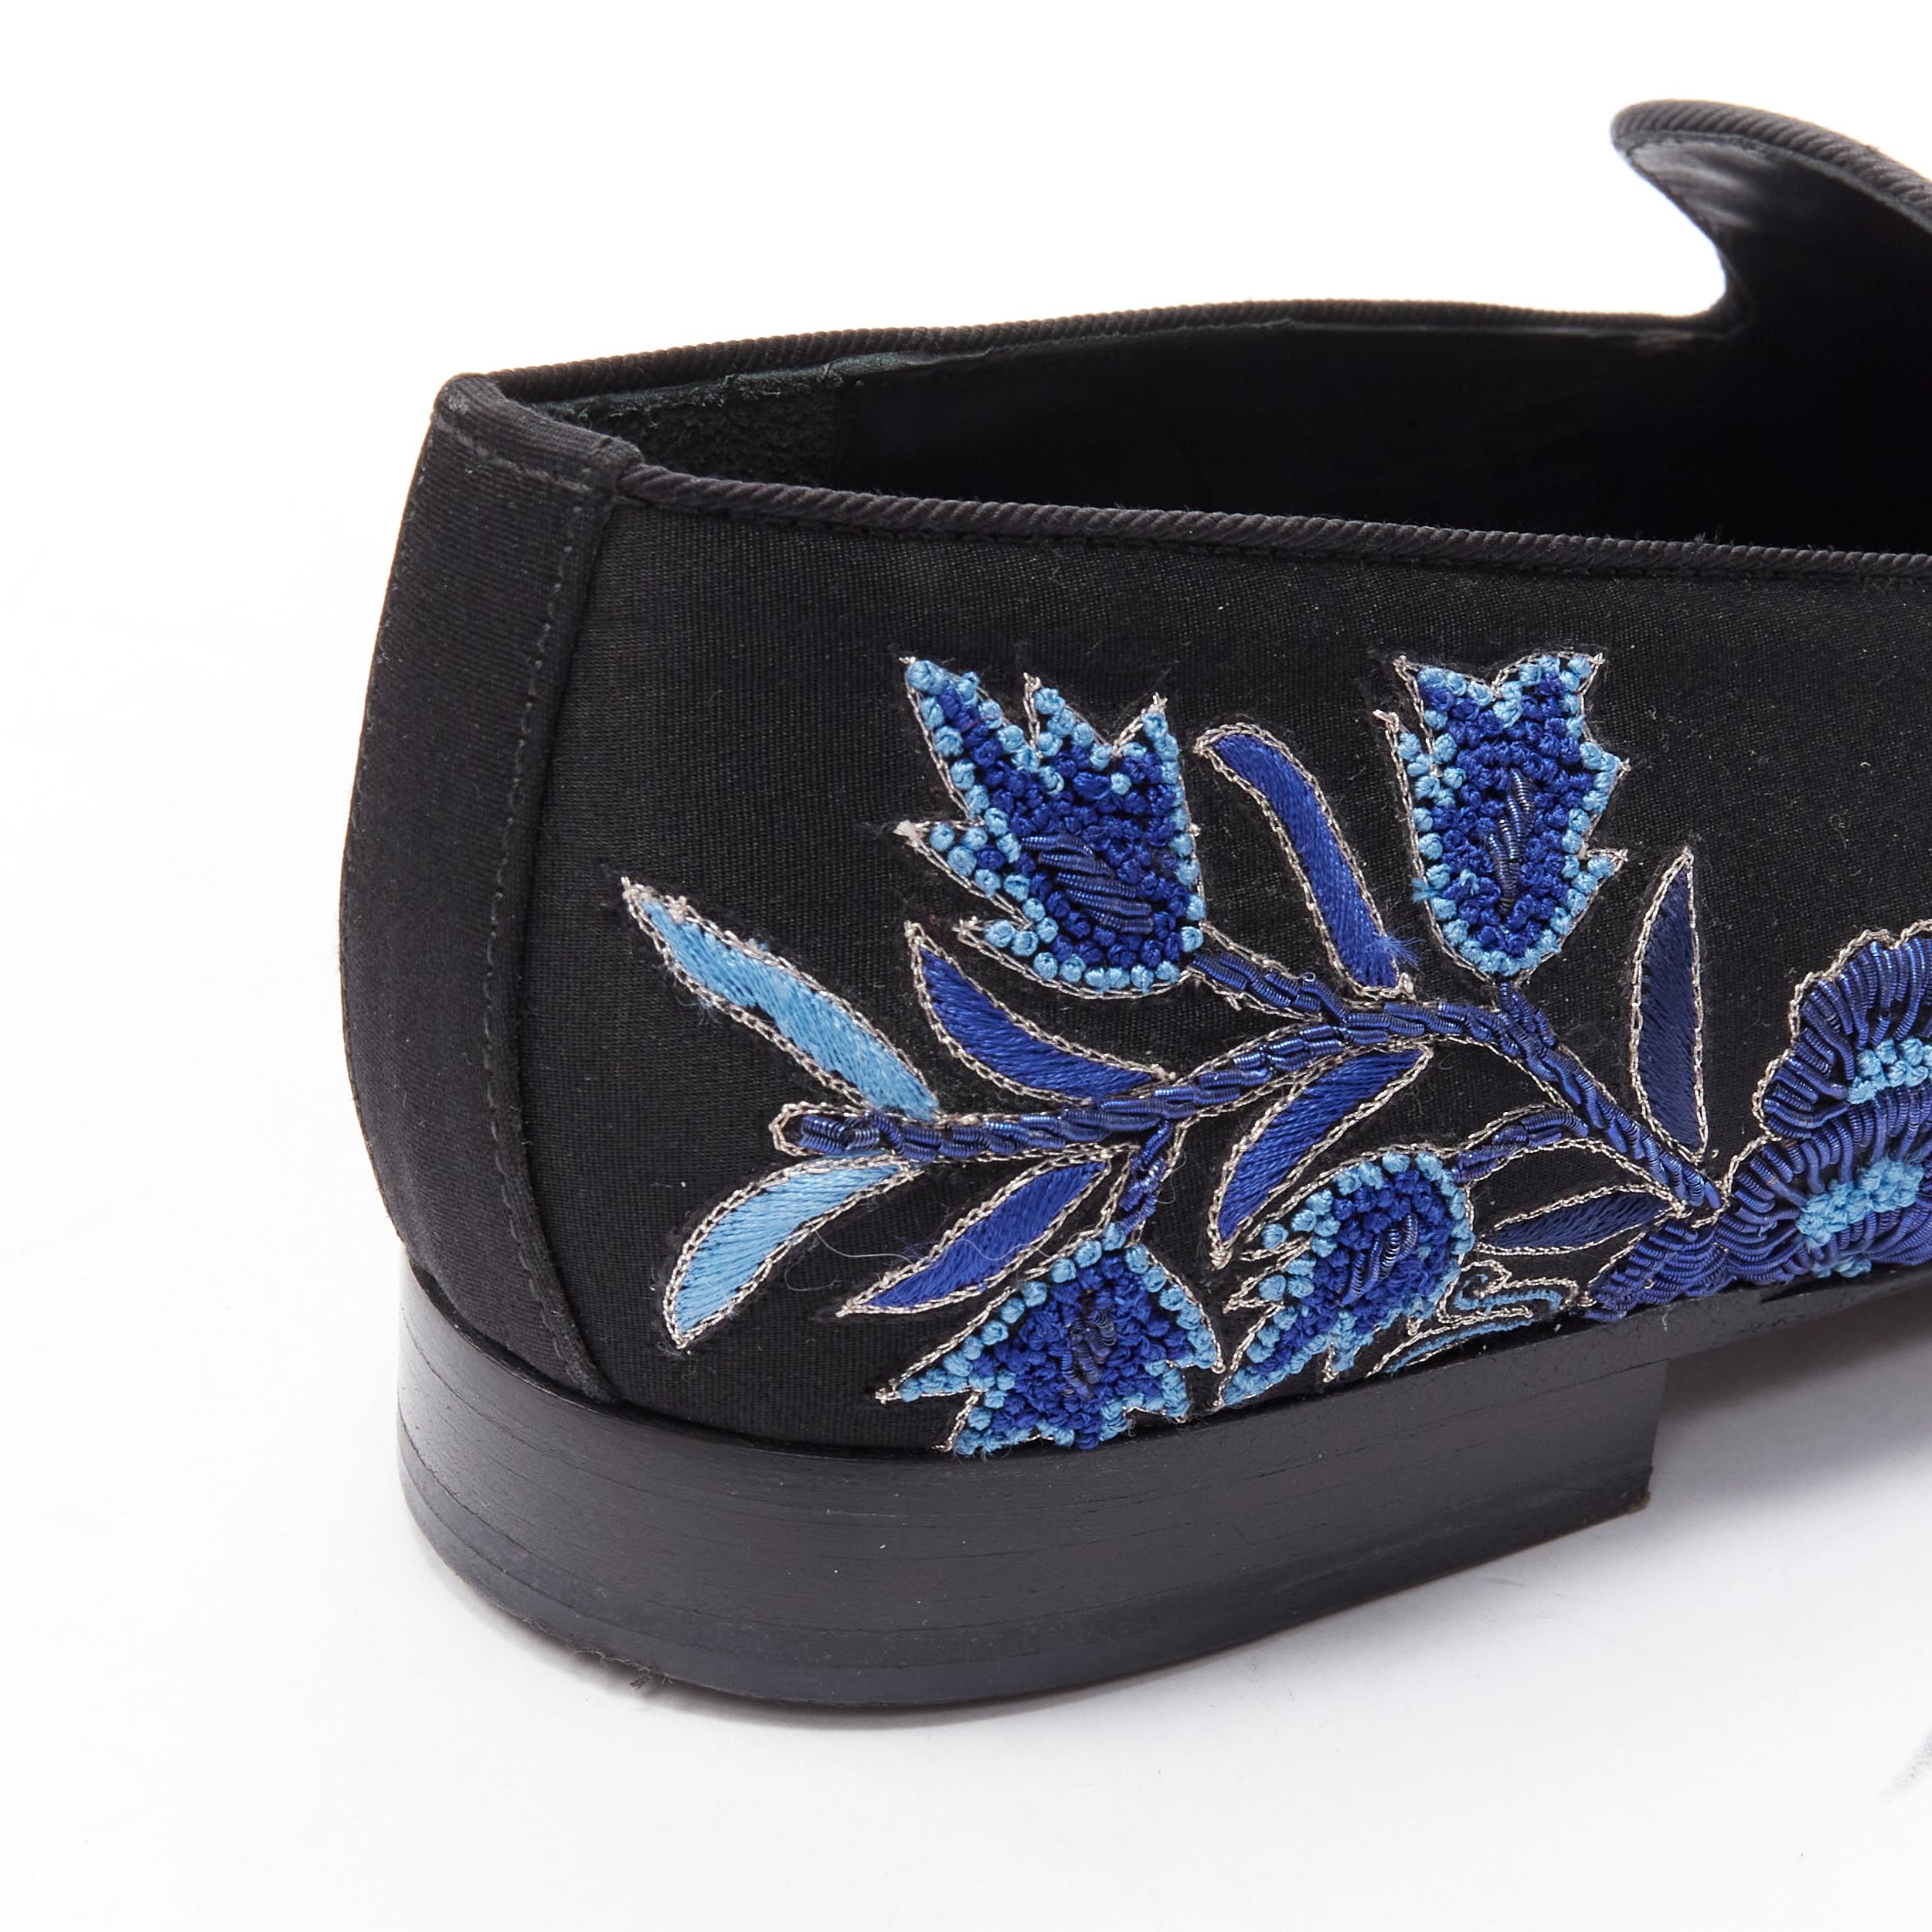 LOUIS LEEMAN black satin blue floral embroidery evening loafer EU42 US9 For Sale 4